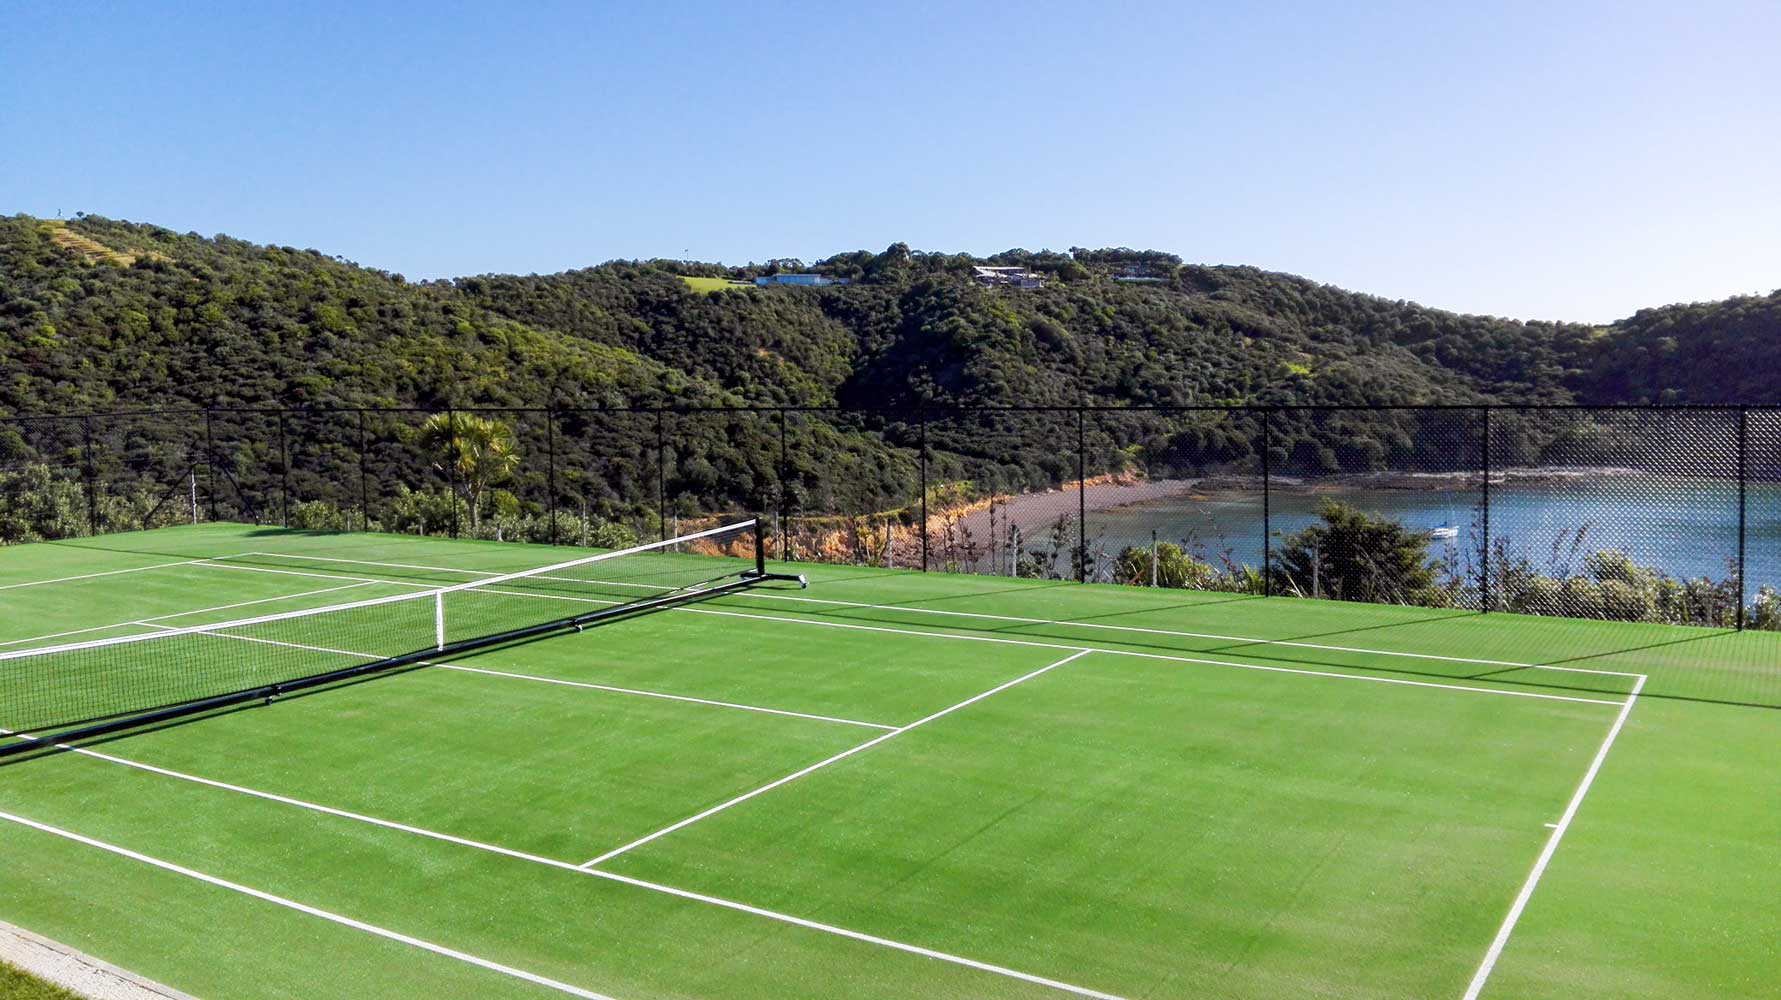 Waiheke Island Private Tennis Court synthetic turf